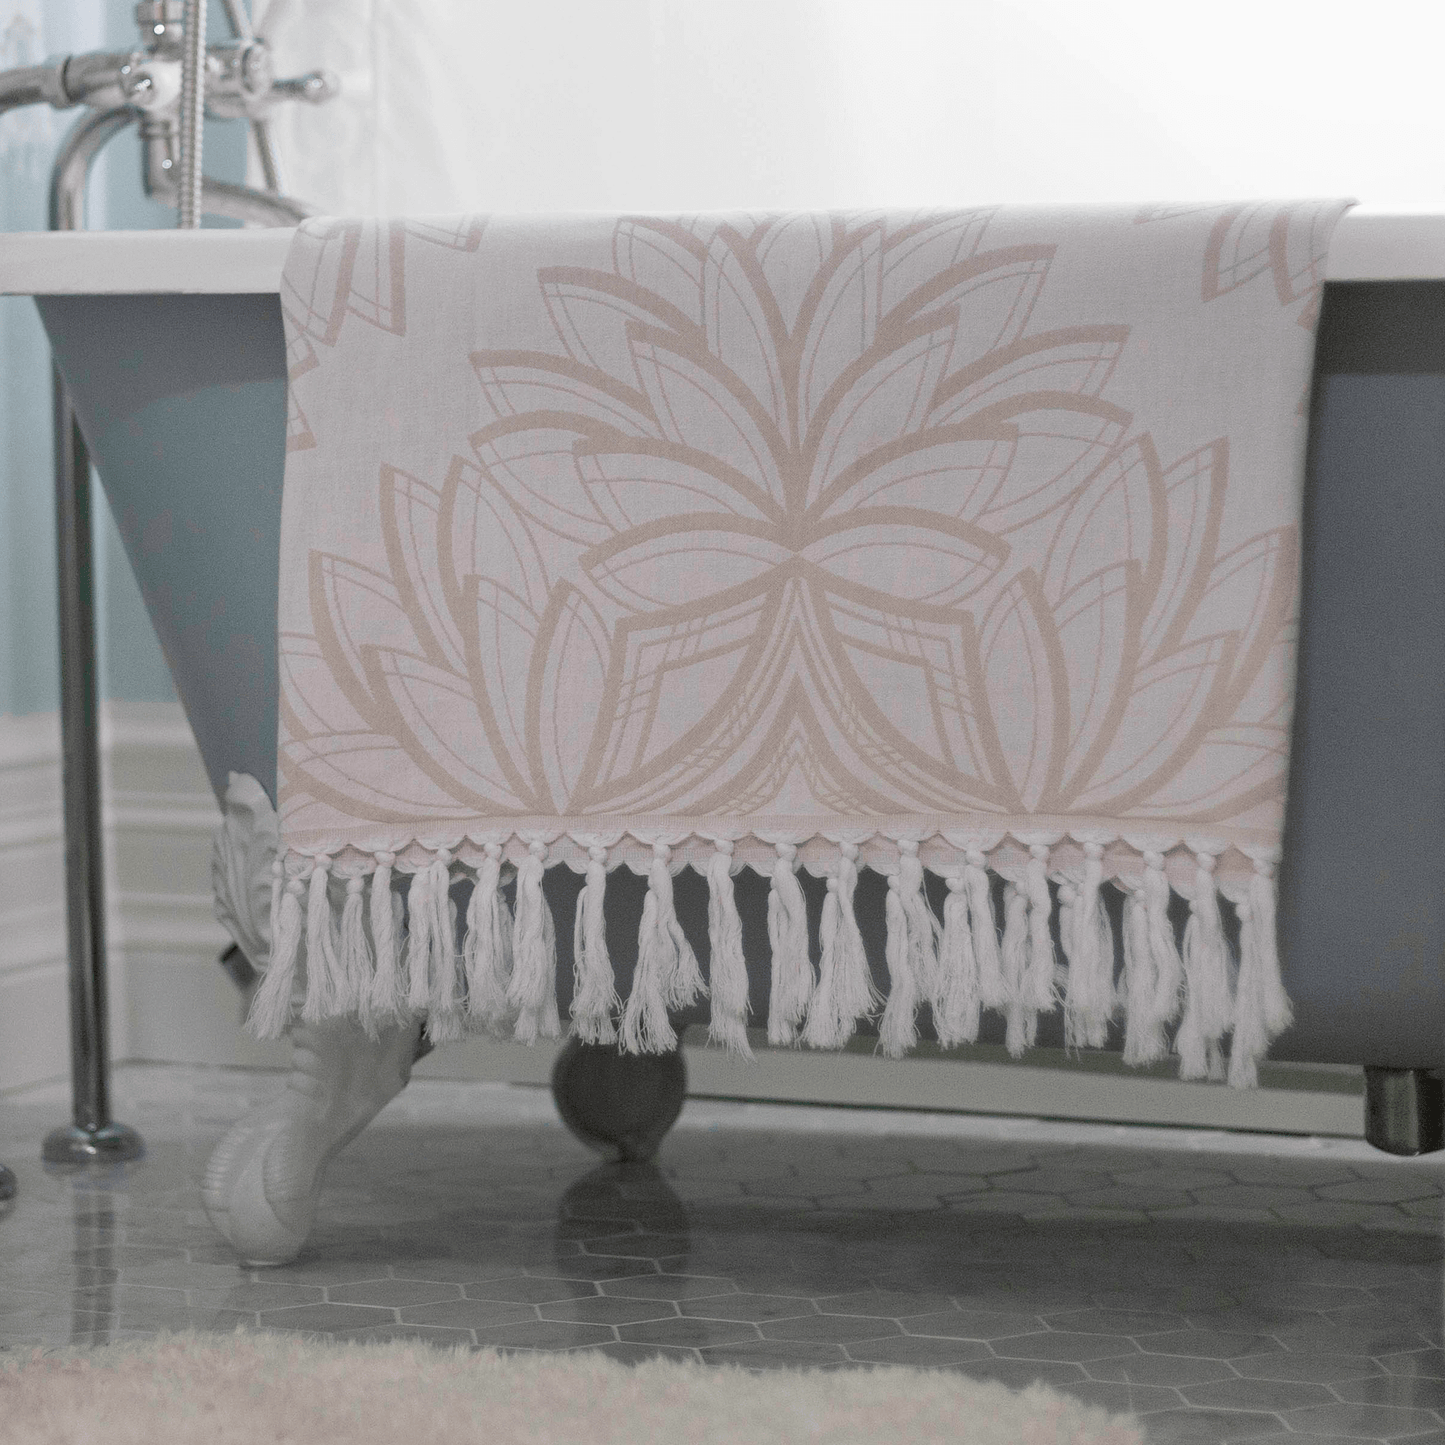 Turkish towel in the bath